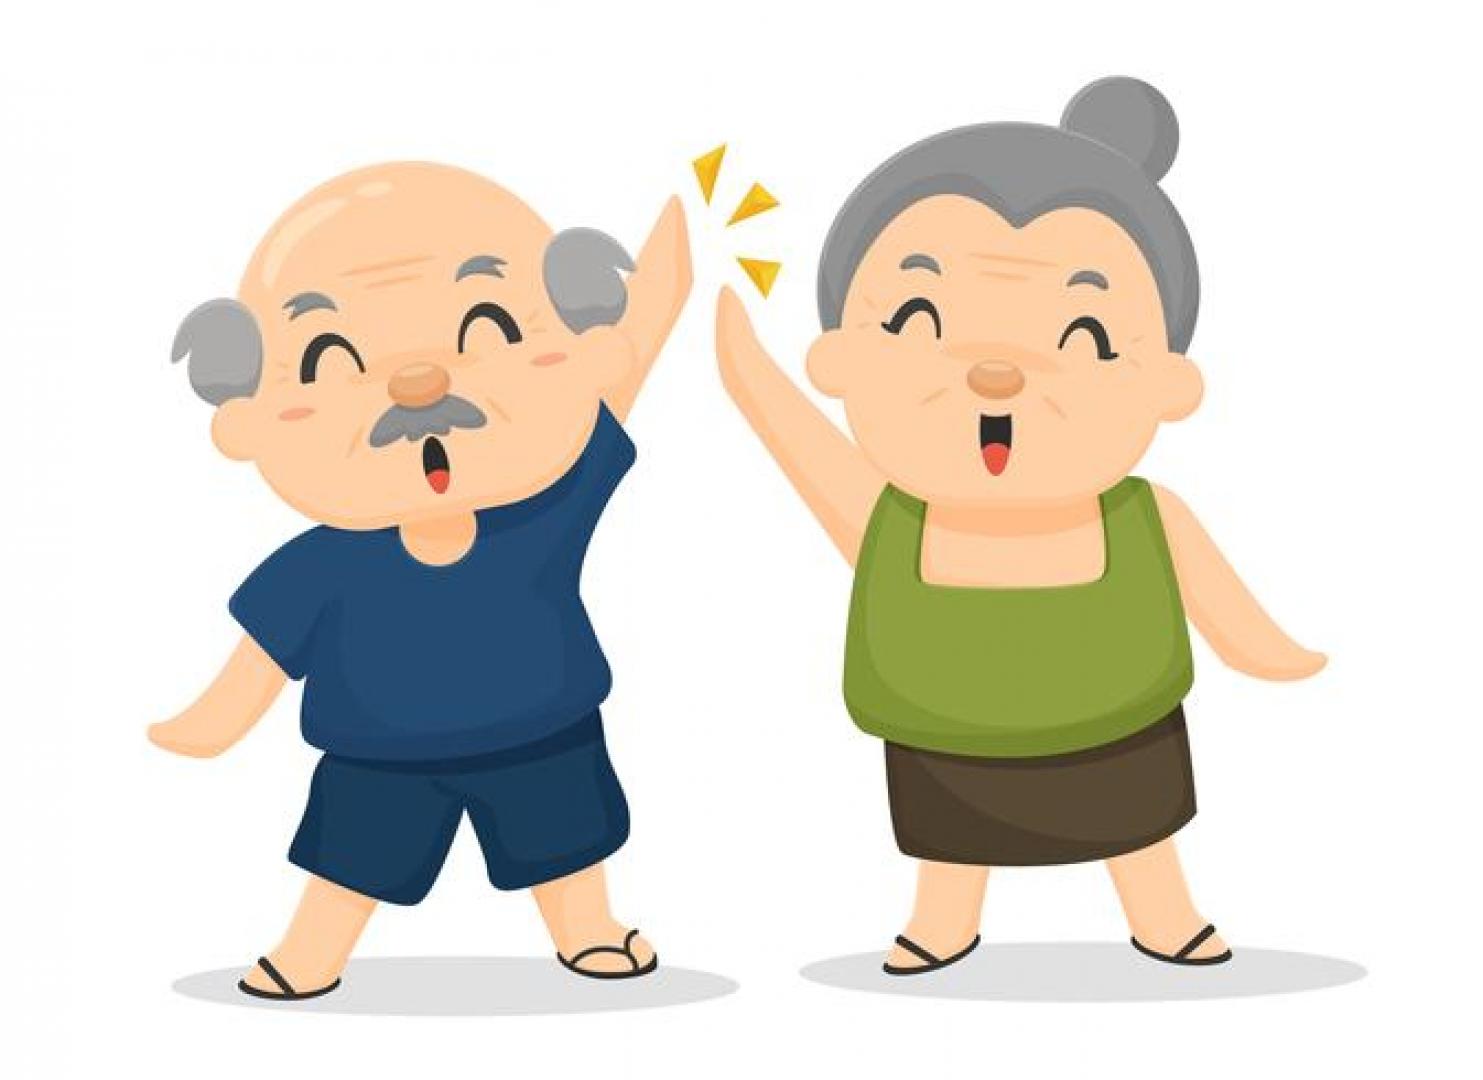 the-elderly-are-happy-after-receiving-welfare-benefits-post-retirement-care-vector.jpg